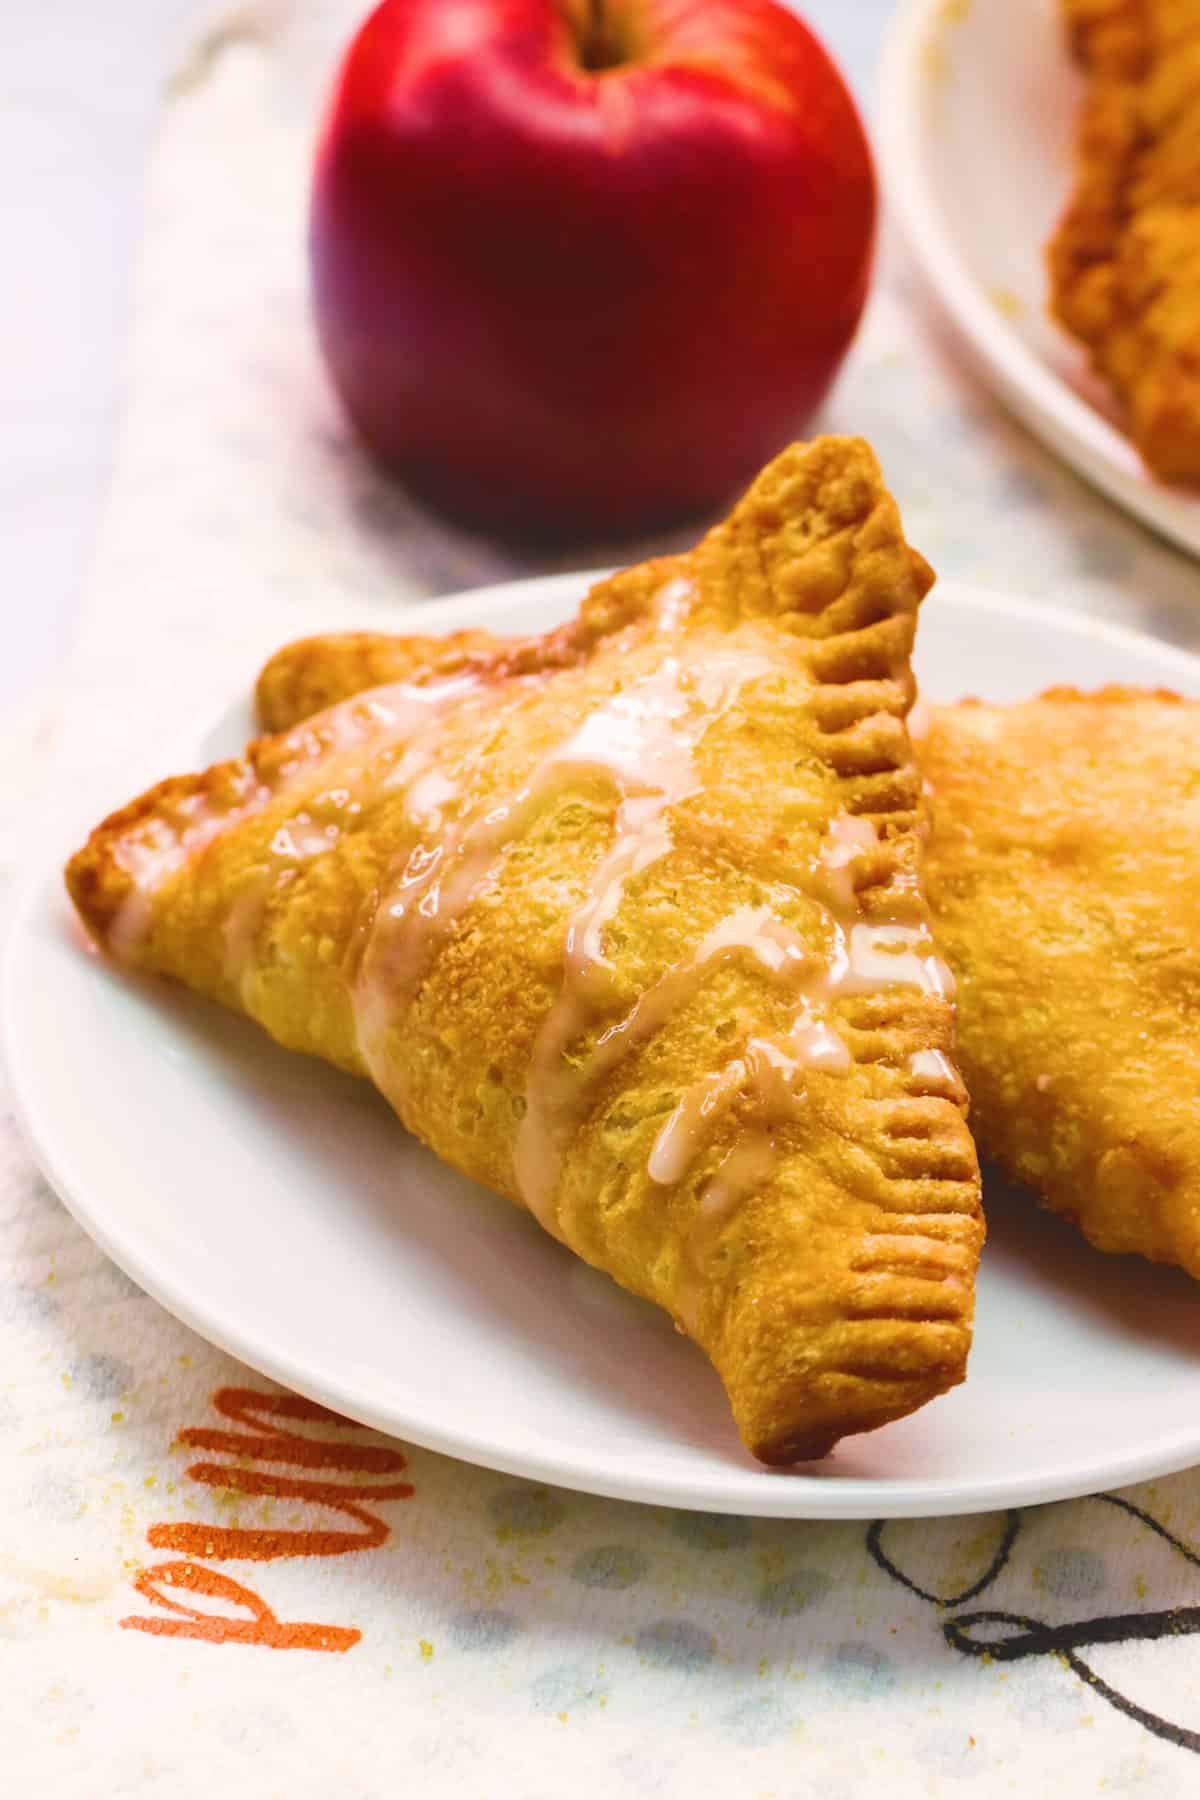 Fried Apple Pies – Warm, tender apple filling encased in flaky, golden pastry